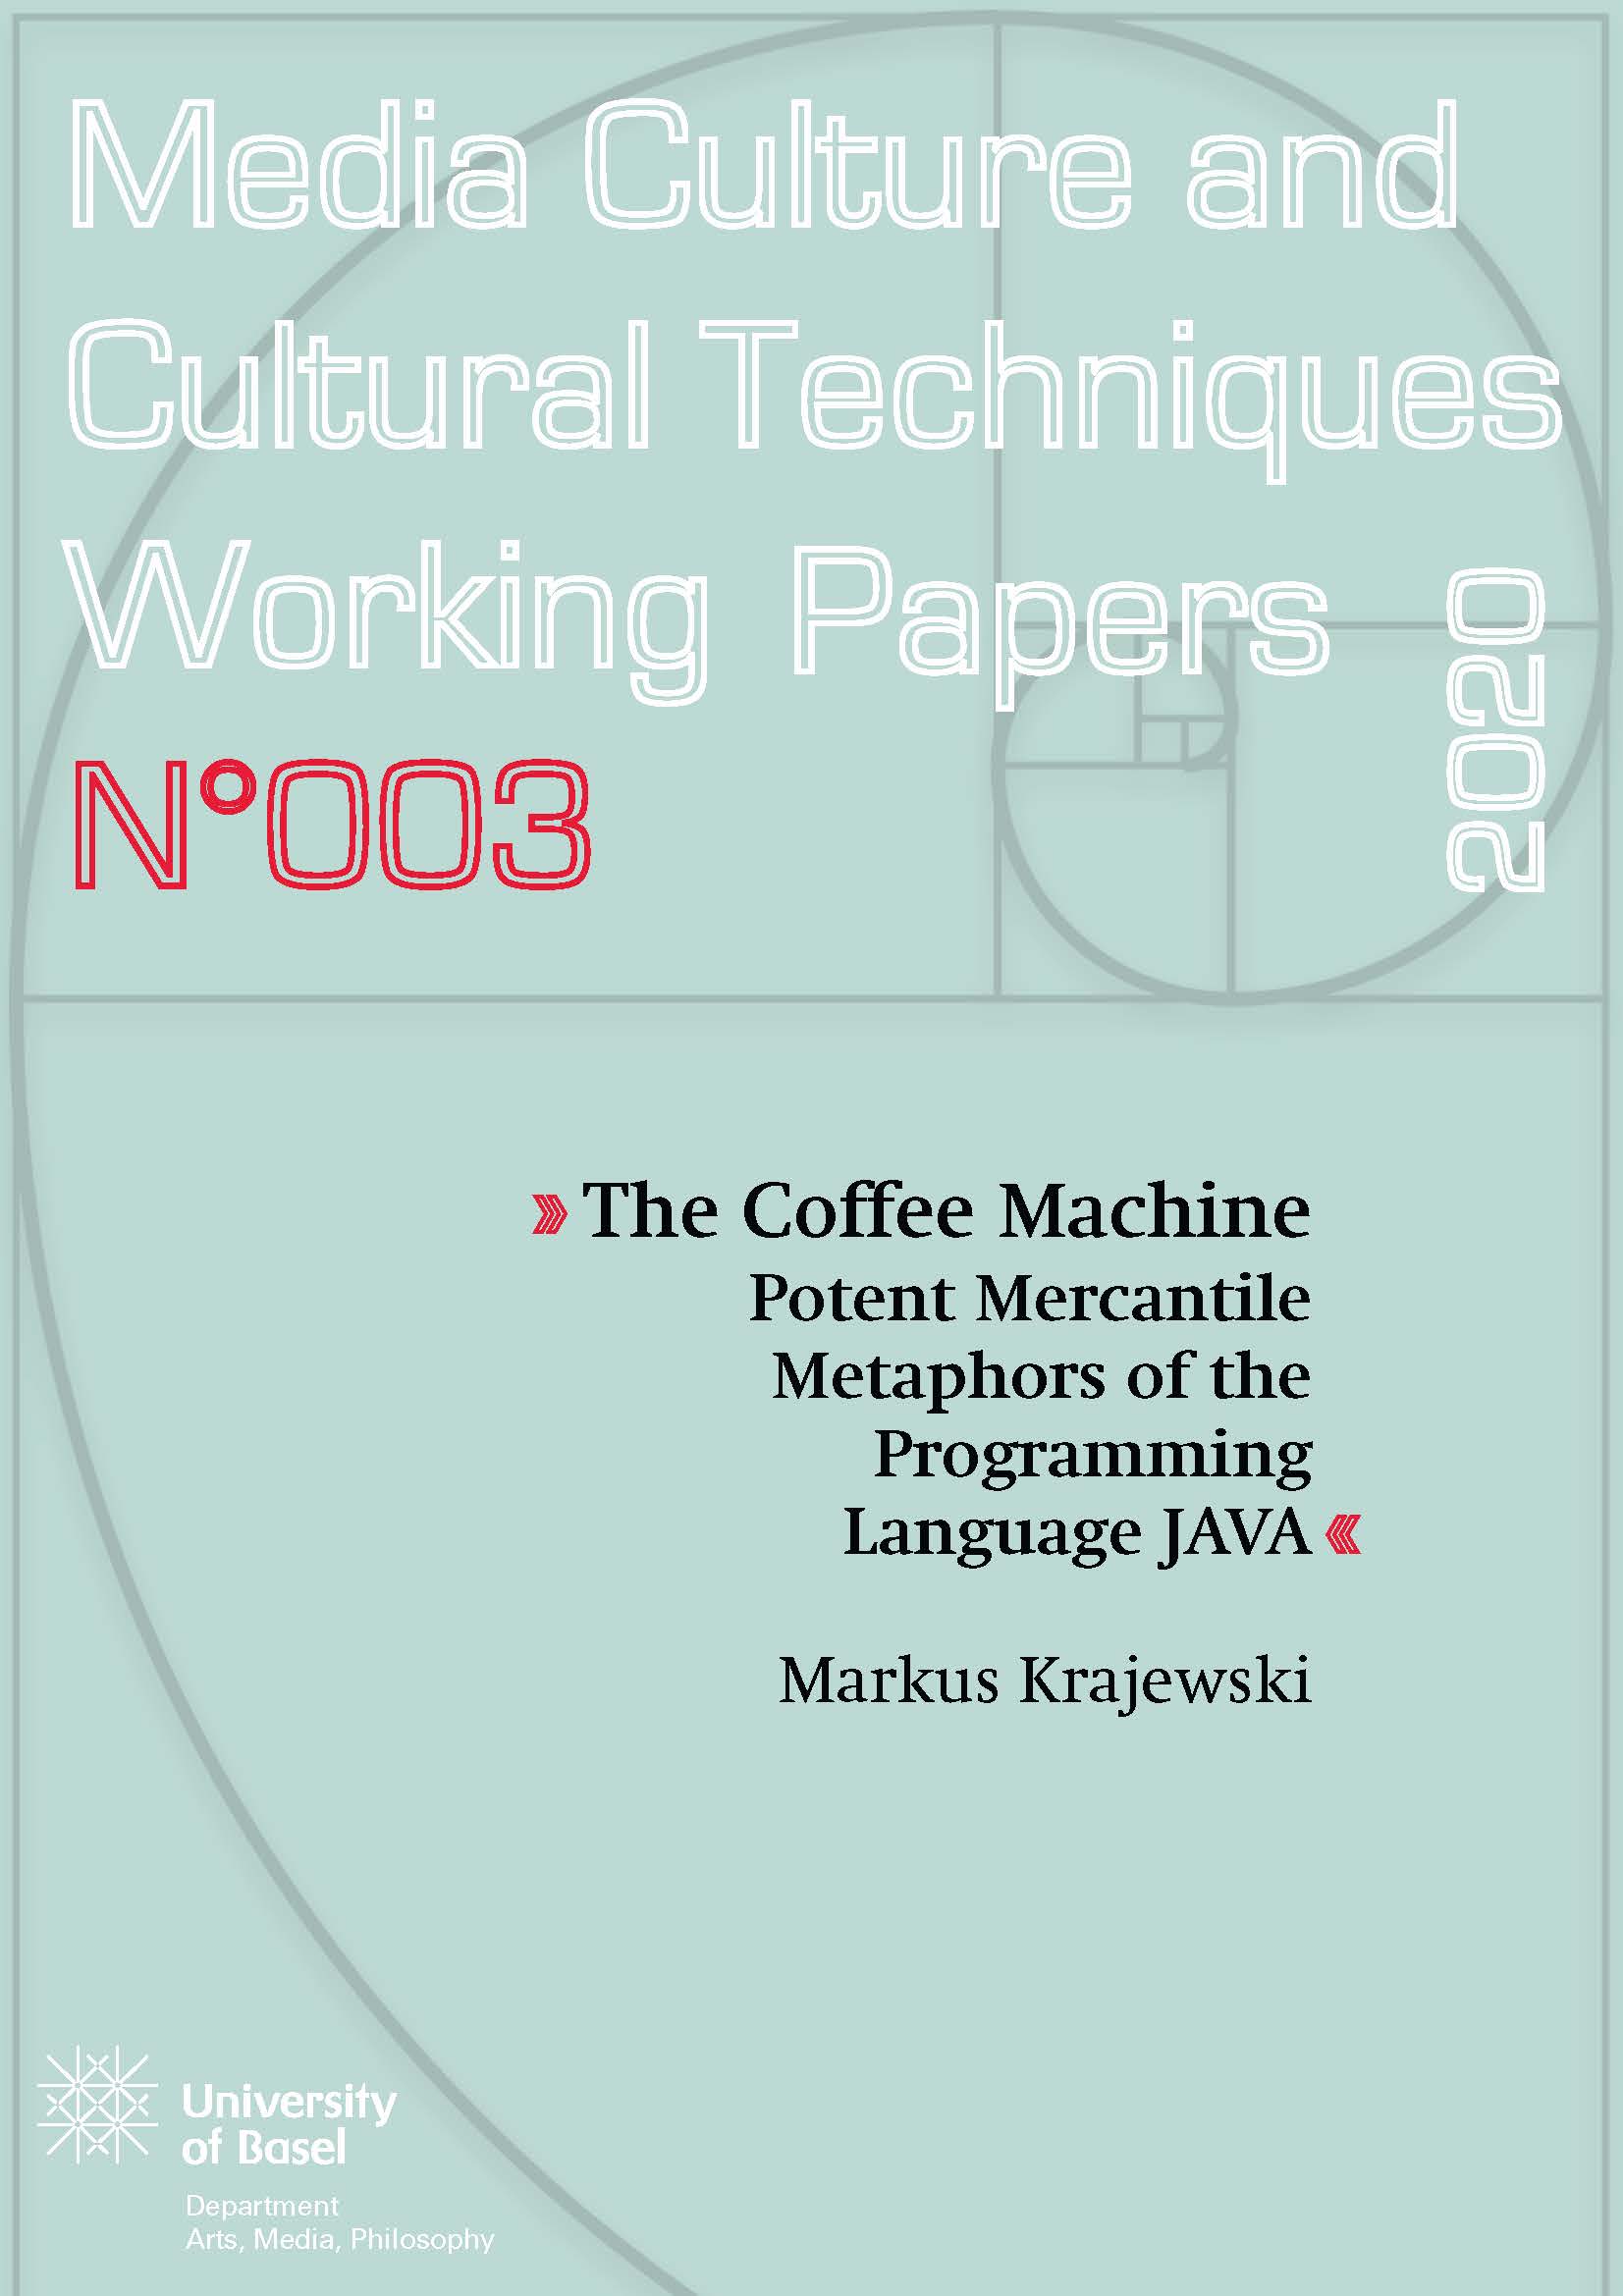 The Coffee Machine Potent Mercantile Metaphors of the Programming Language JAVA